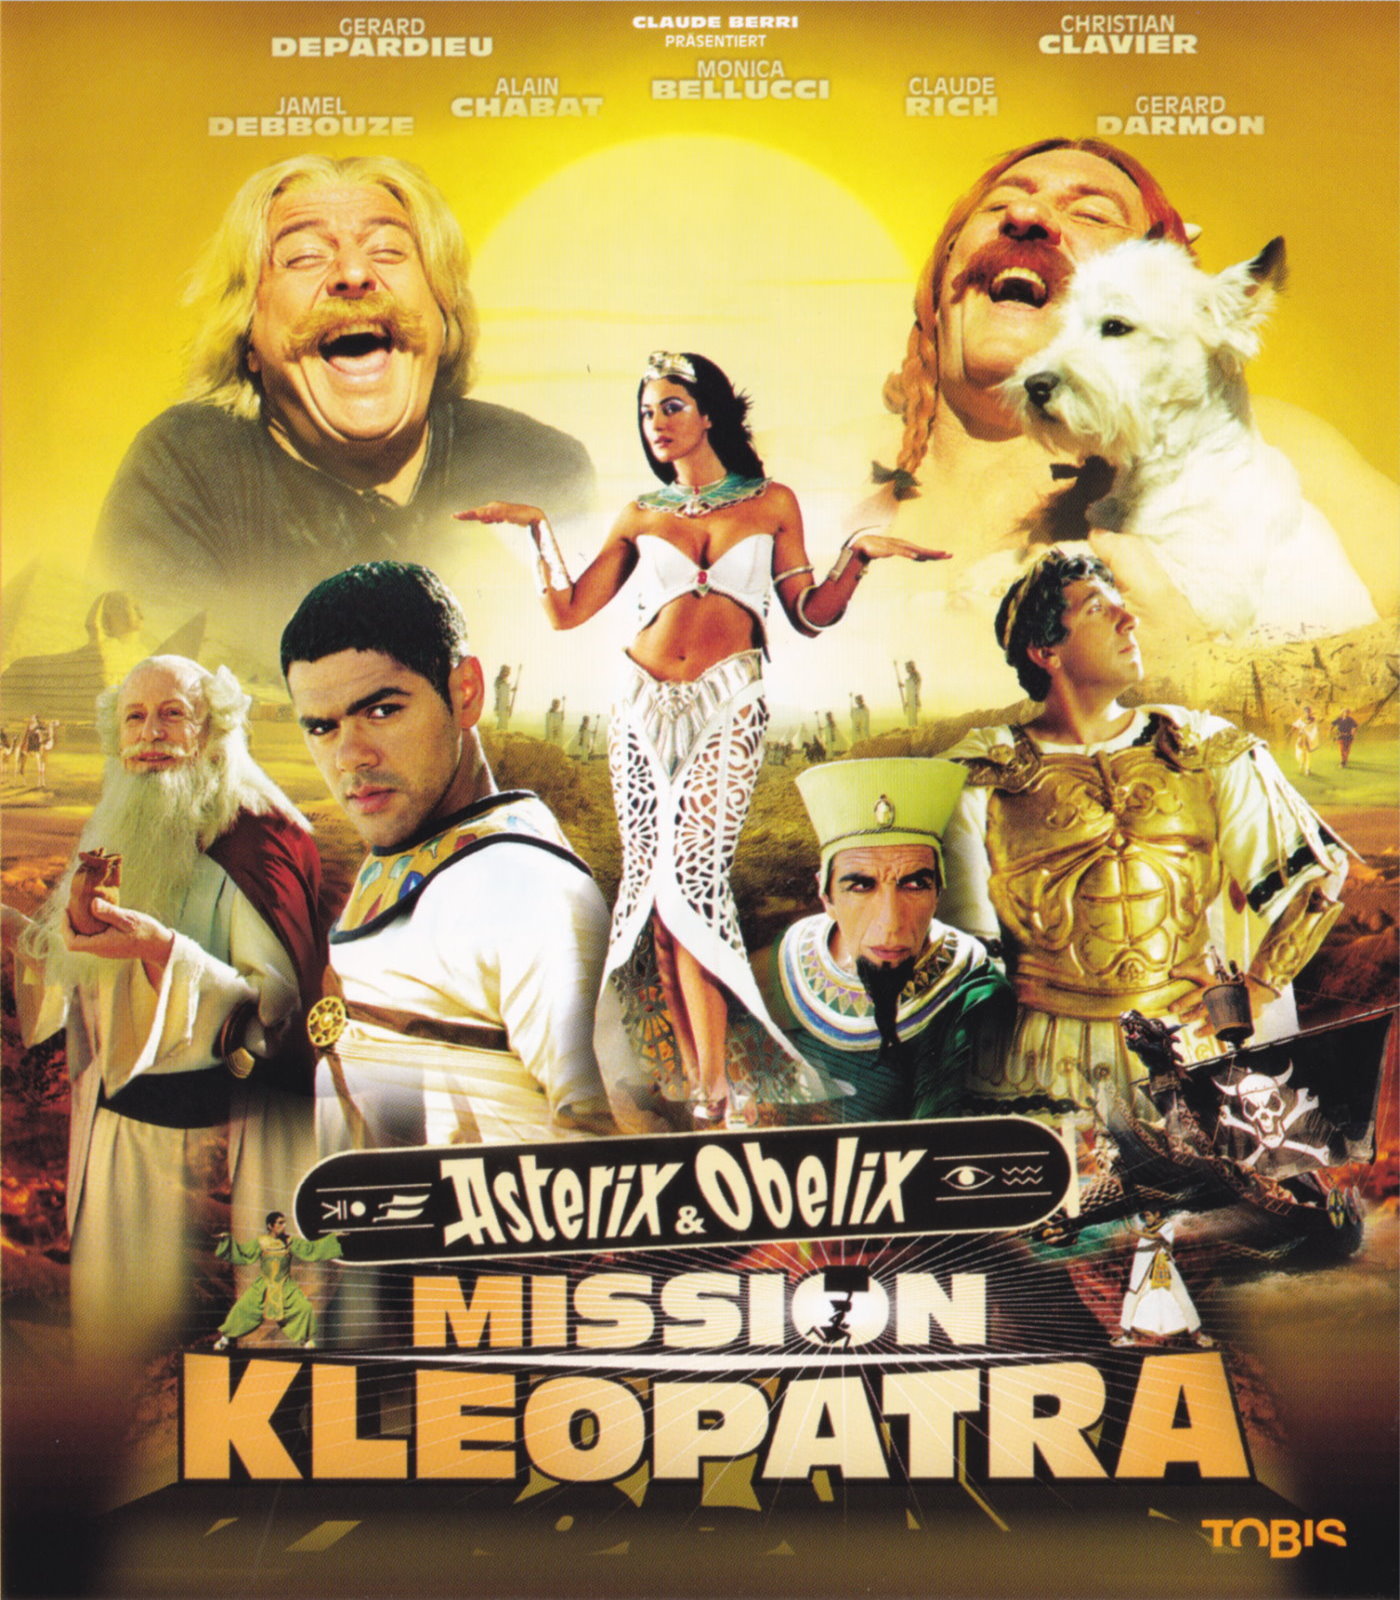 Cover - Asterix & Obelix: Mission Kleopatra.jpg